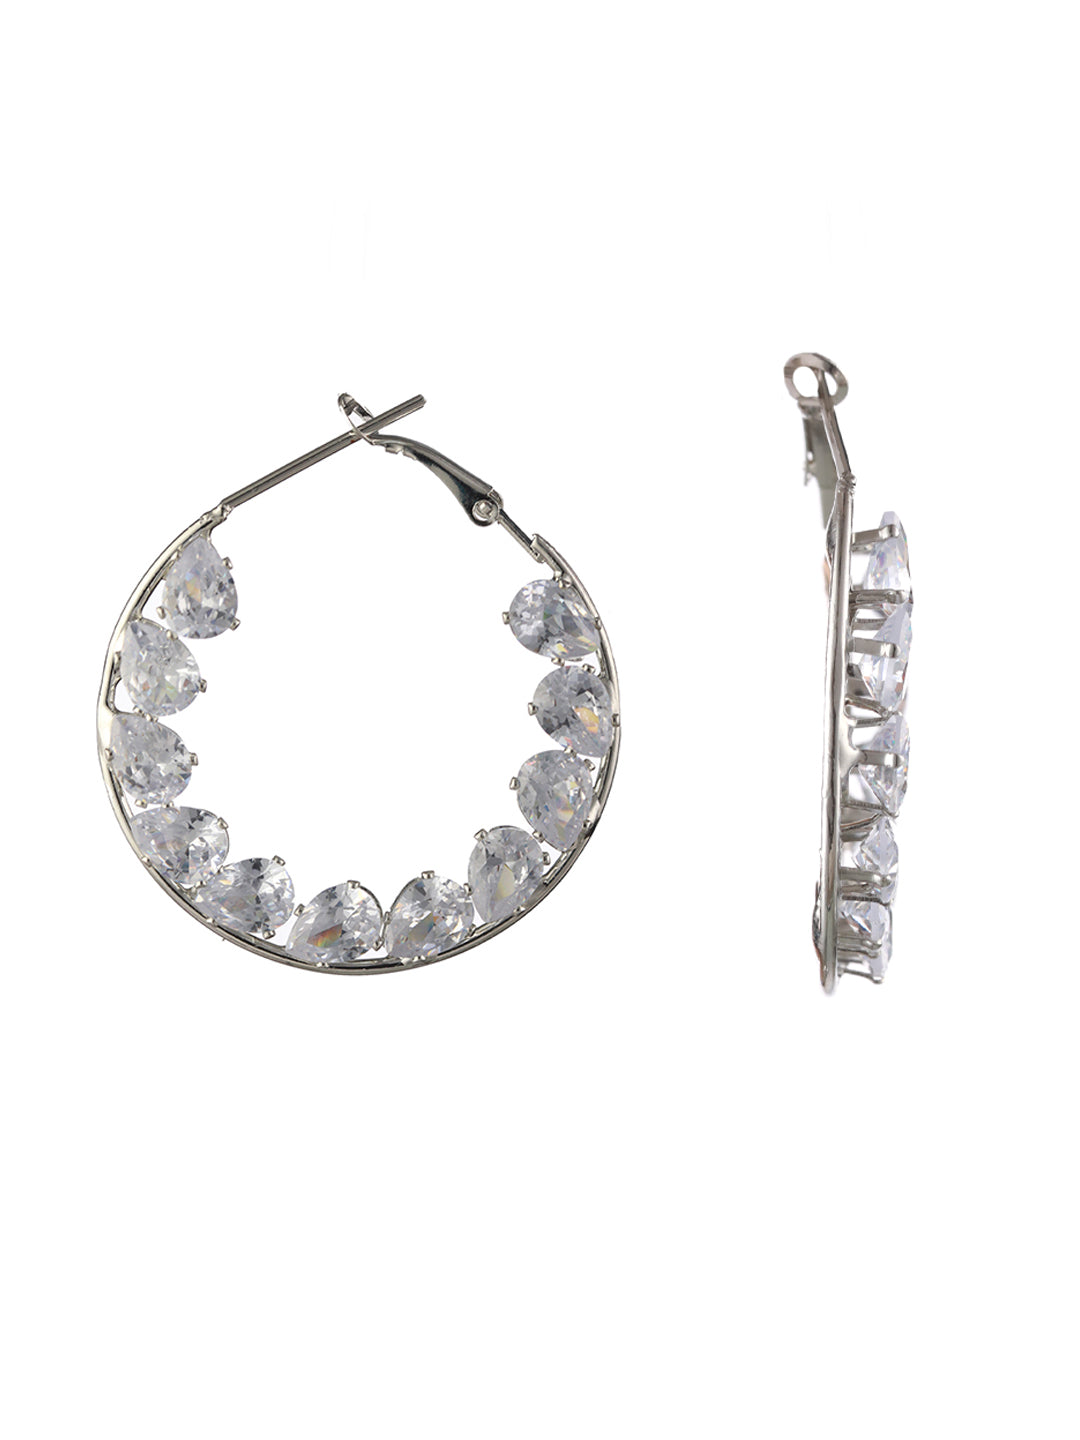 Stylish American Diamond Silver-Plated Hoop Earrings